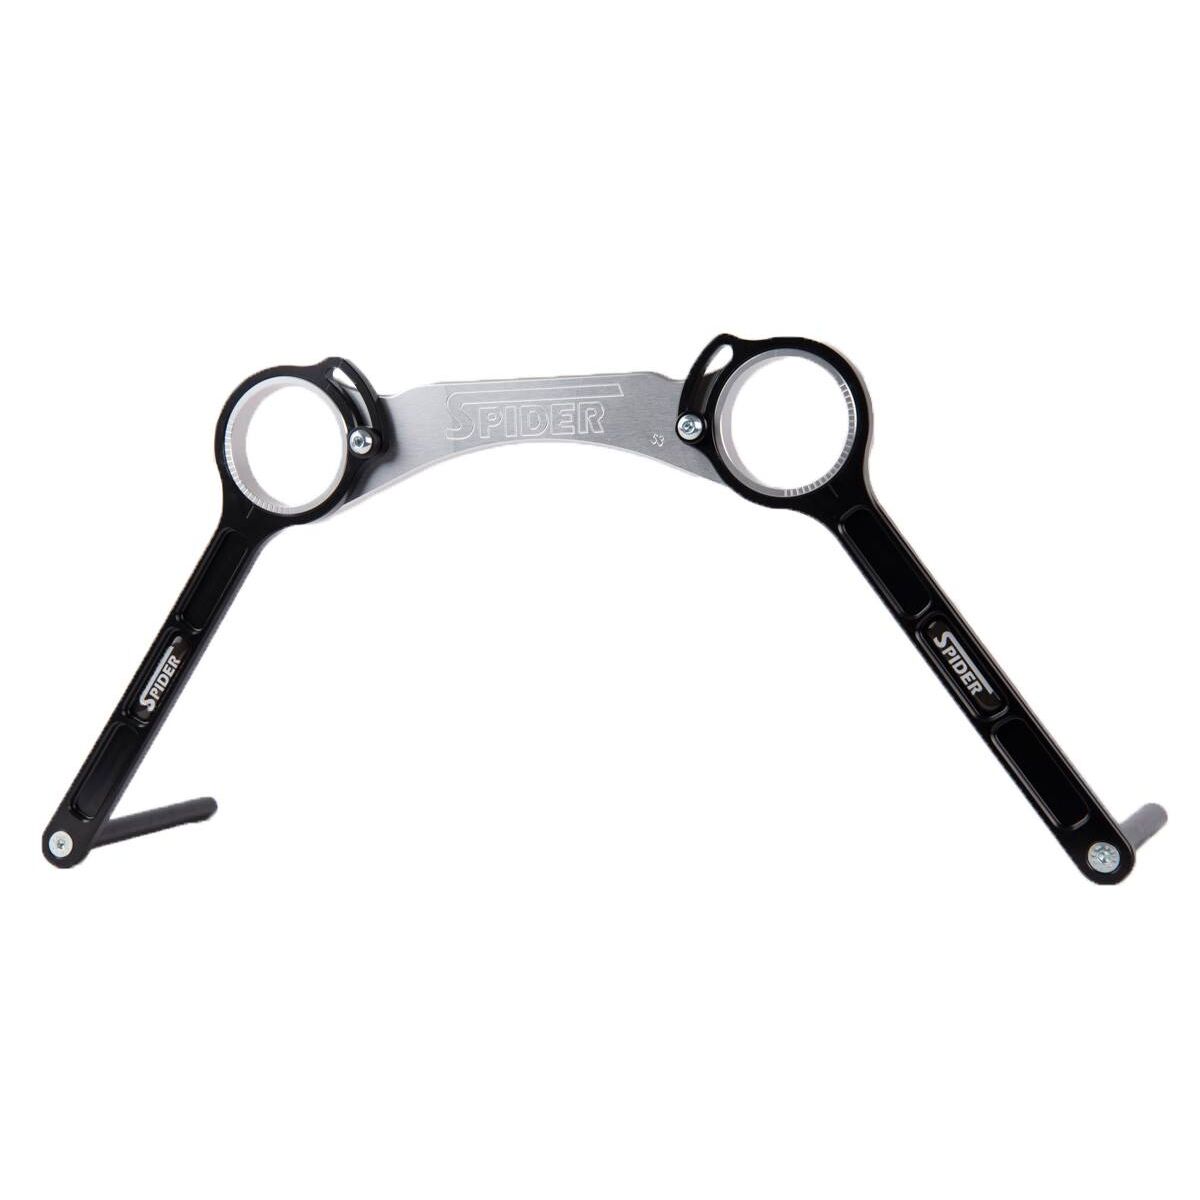 tool to adjust bike handlebars